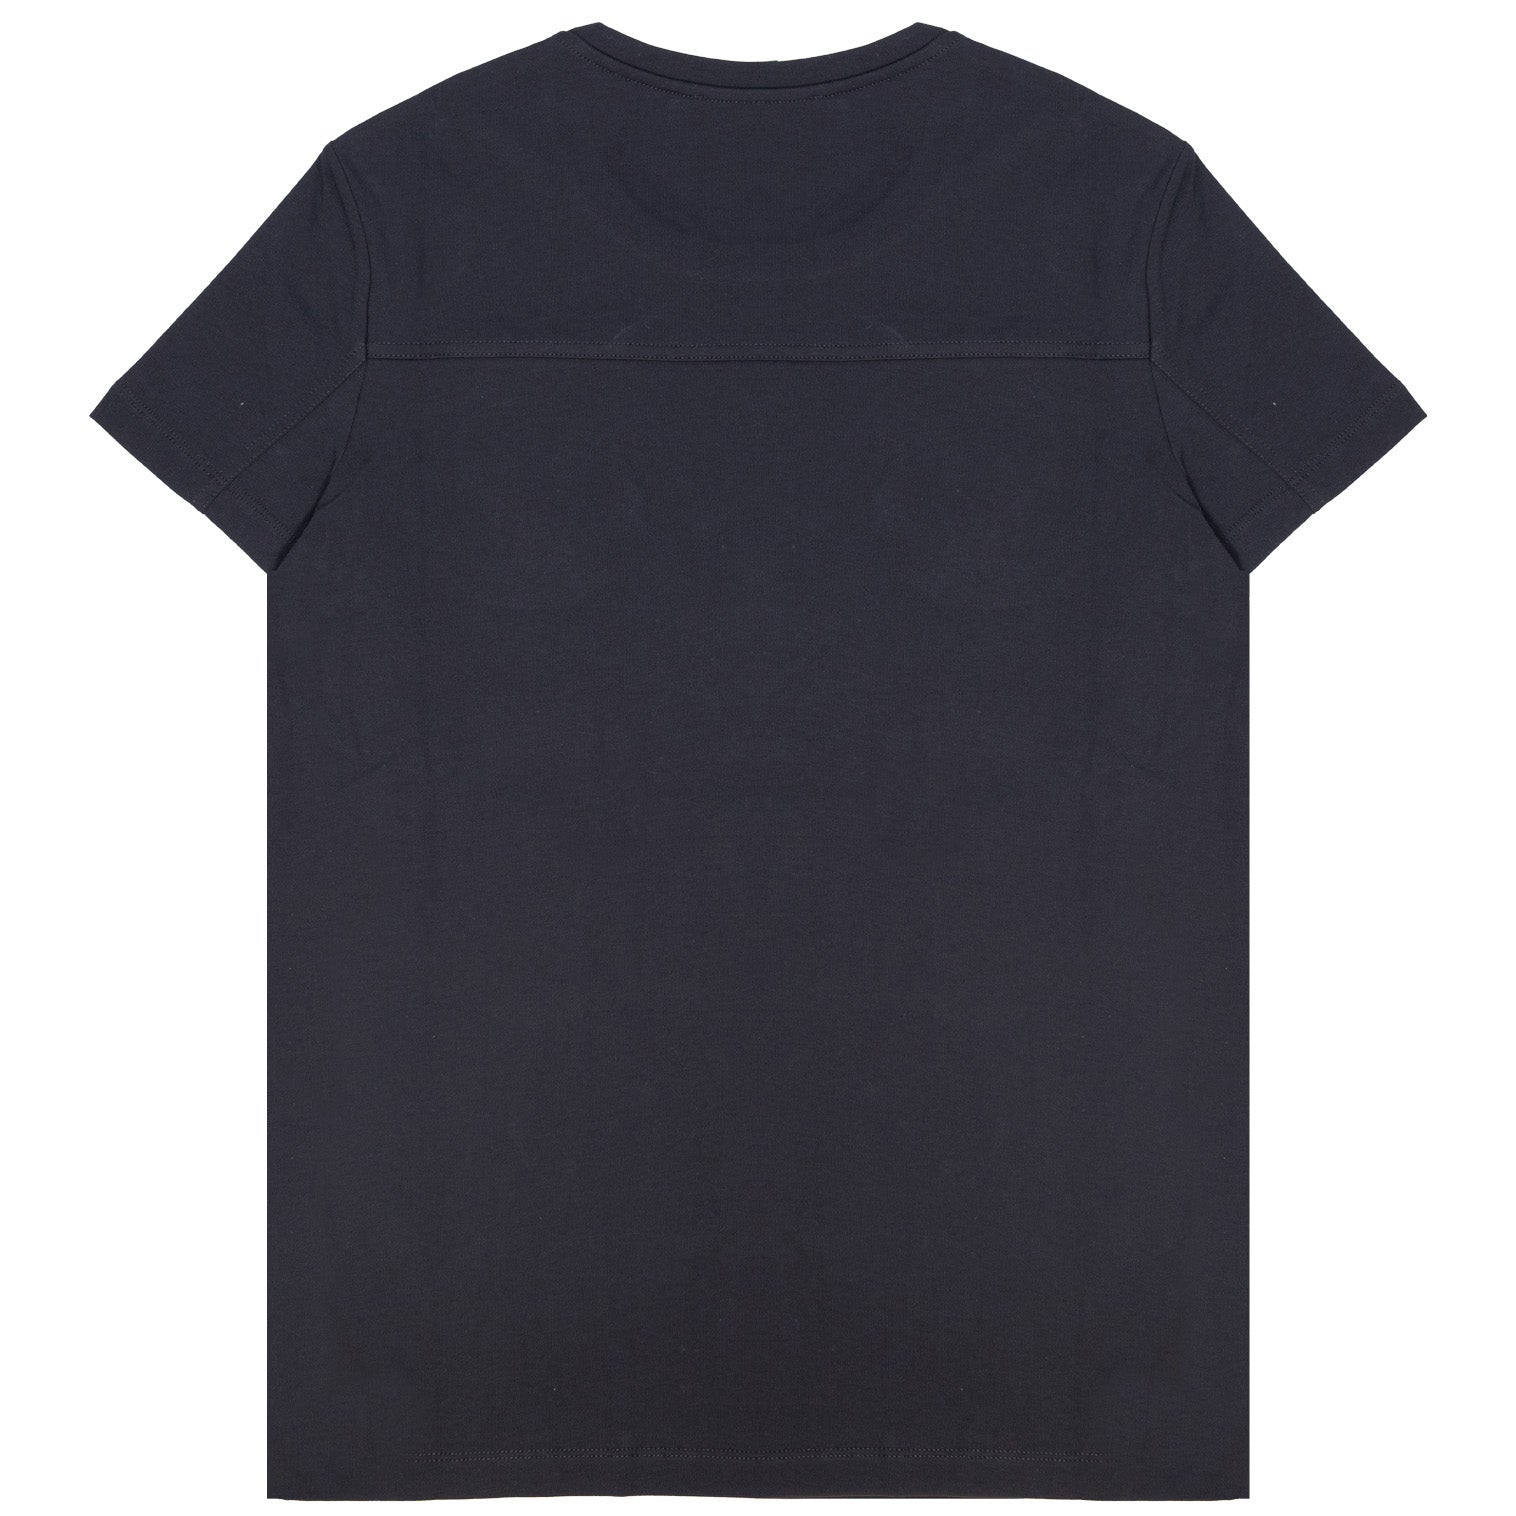 Balmain Black Applique Gold Logo T-Shirt T-Shirt Balmain 